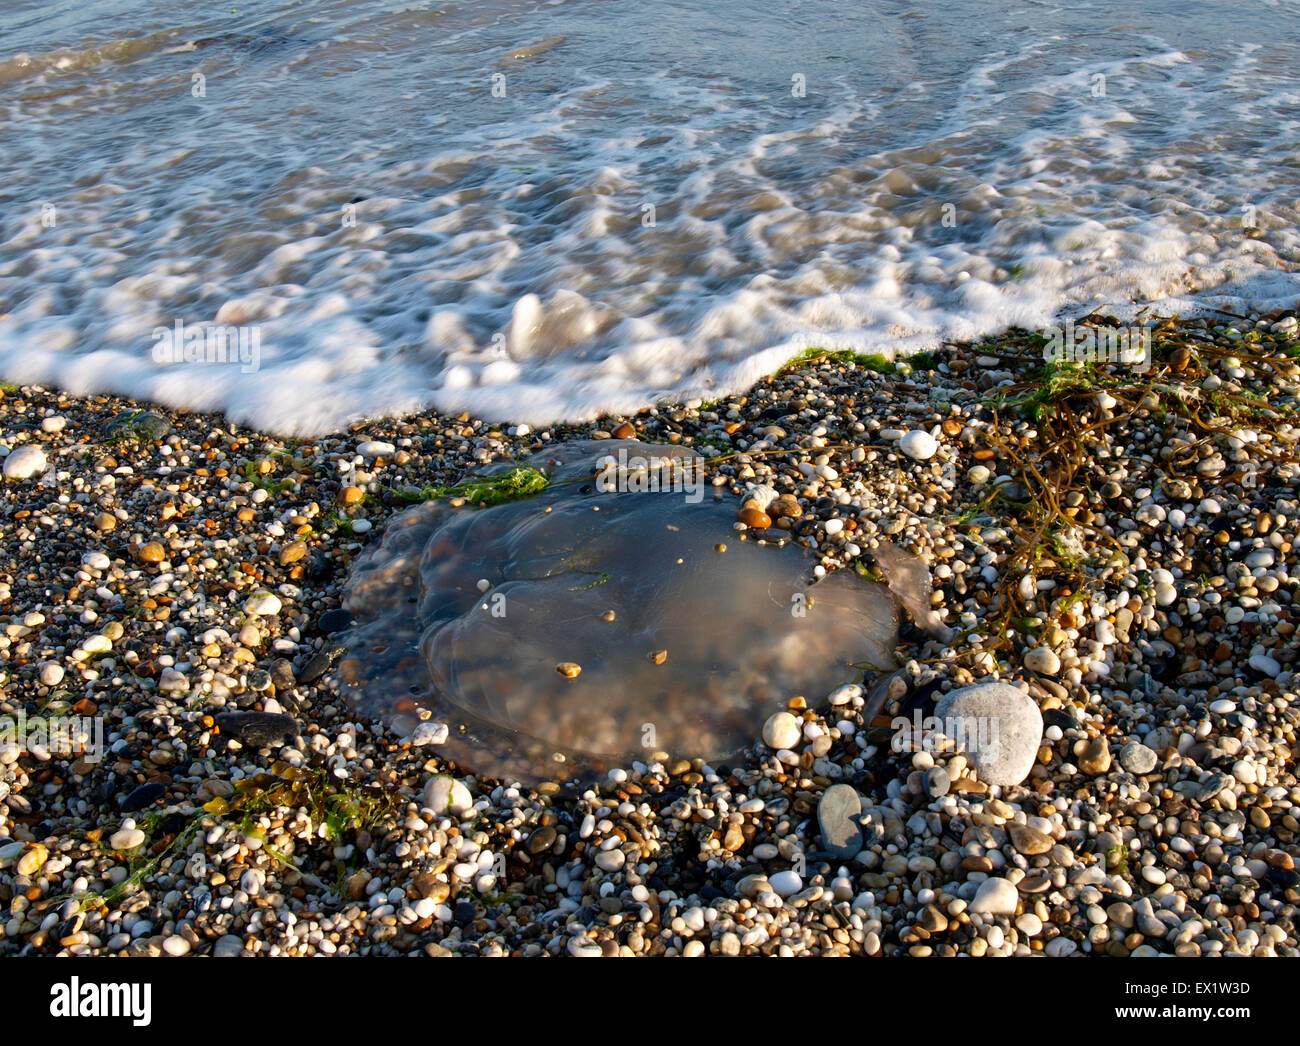 Jellyfish washed up on the beach, Marazion, Cornwall, UK Stock Photo